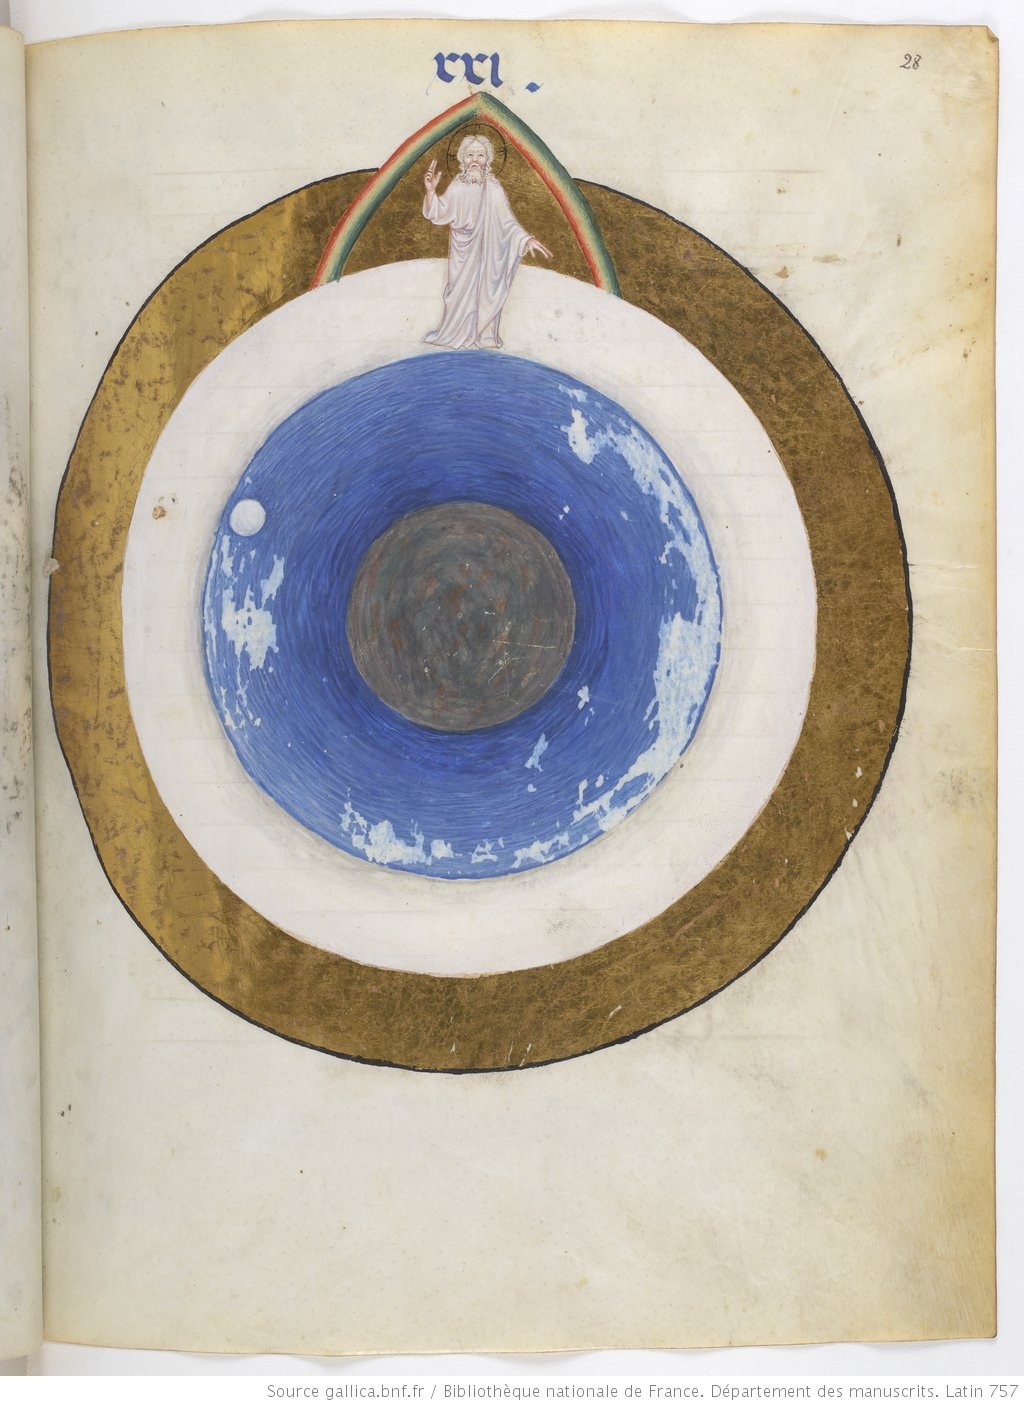 2 Lundi Missel a l’usage des freres mineurs, Lombardie, 1388, Gallica BNF ms. lat. 757, fol. 28r